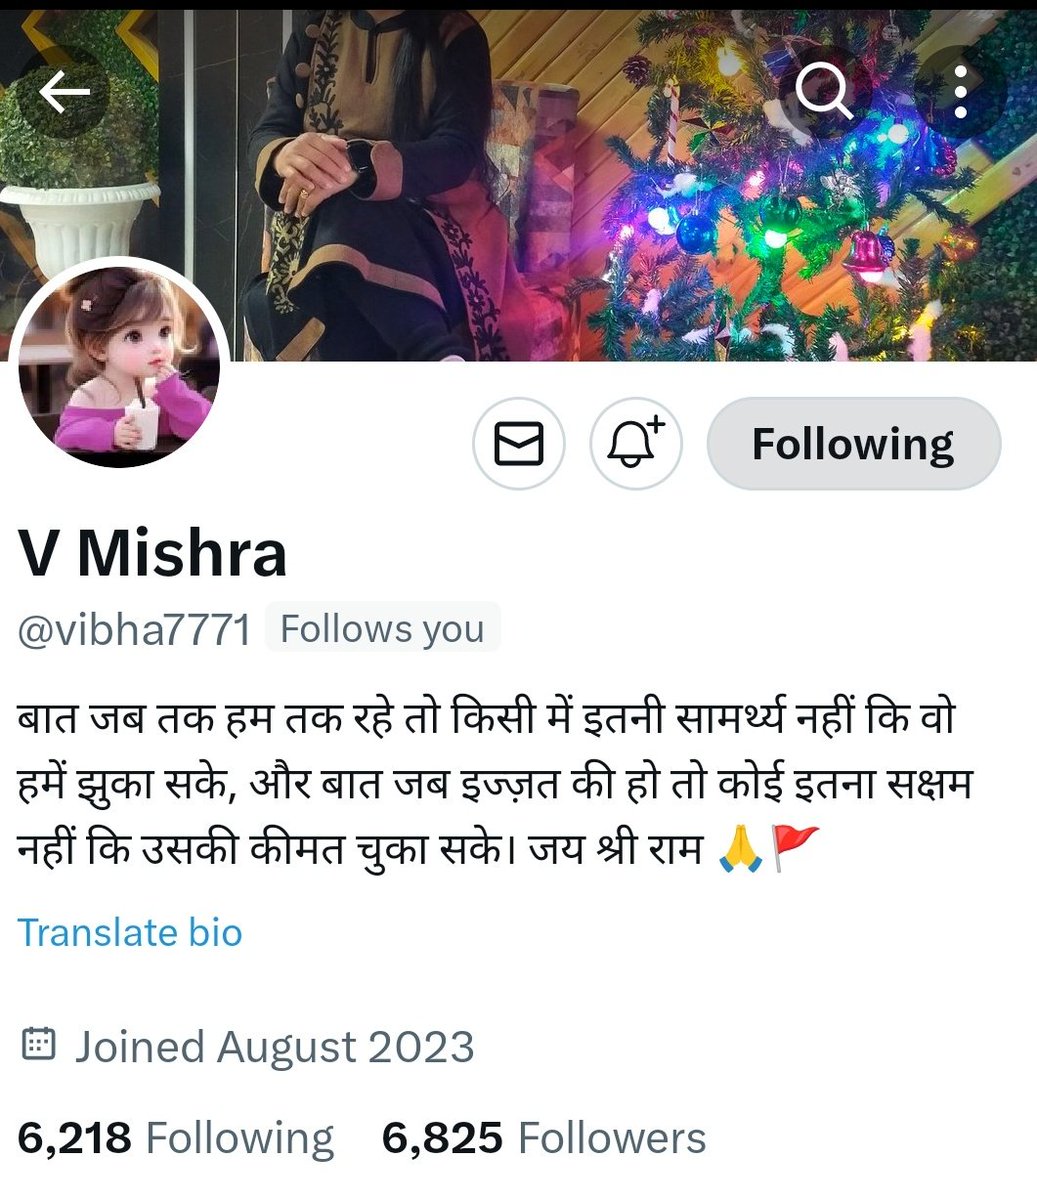 Follow @vibha7771 for instant follow back.